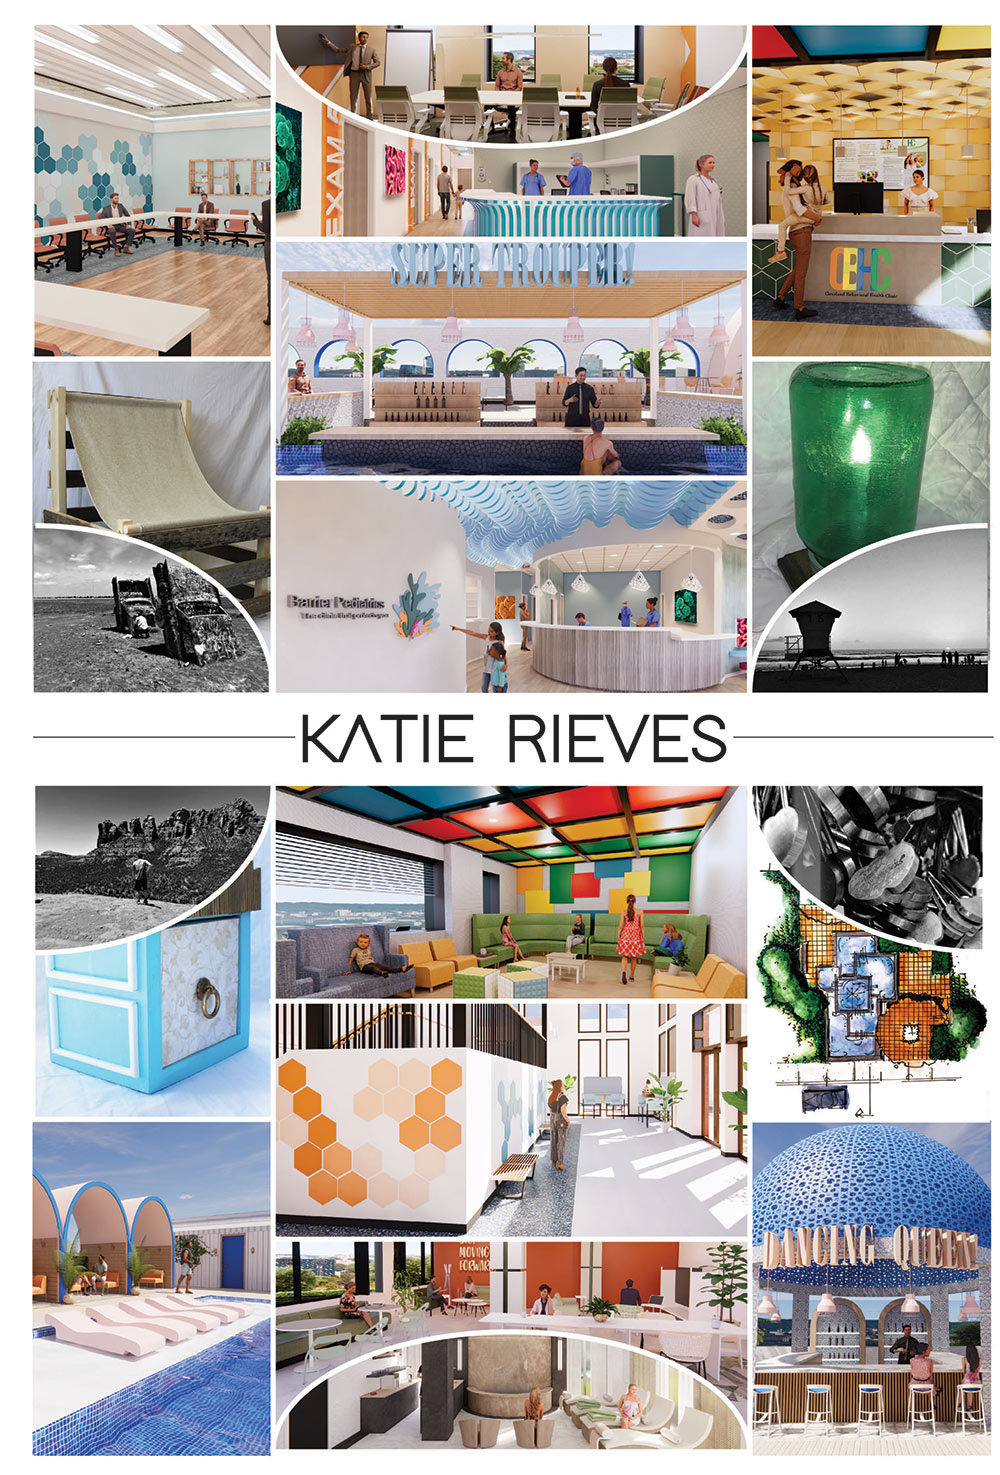 Katie Rieves' interior design senior exhibit board